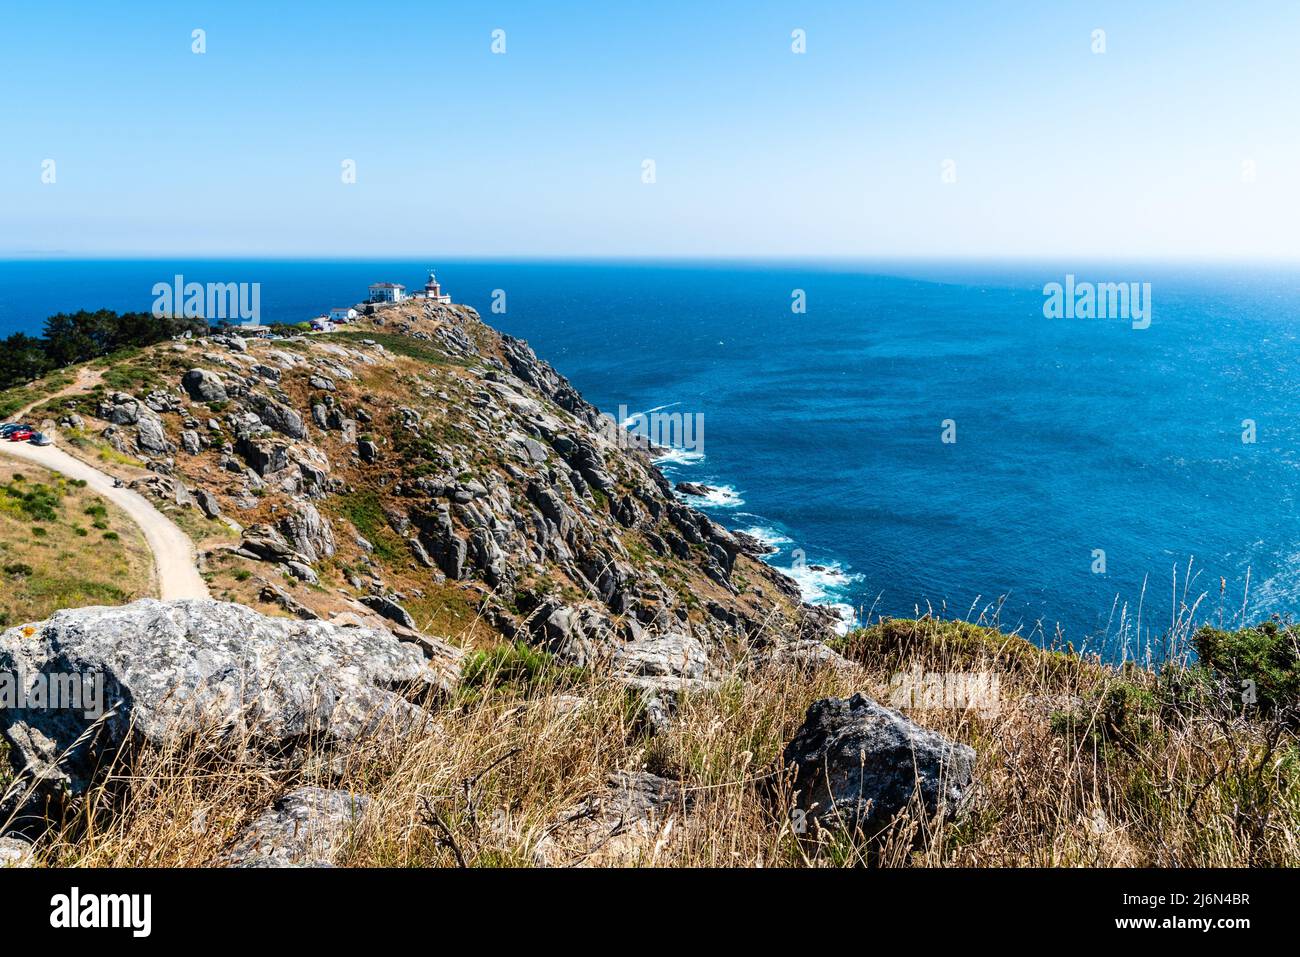 View of Cape Finisterre Lighthouse at Costa da Morte or Death Coast at Fisterra, Coruna, Spain. Stock Photo